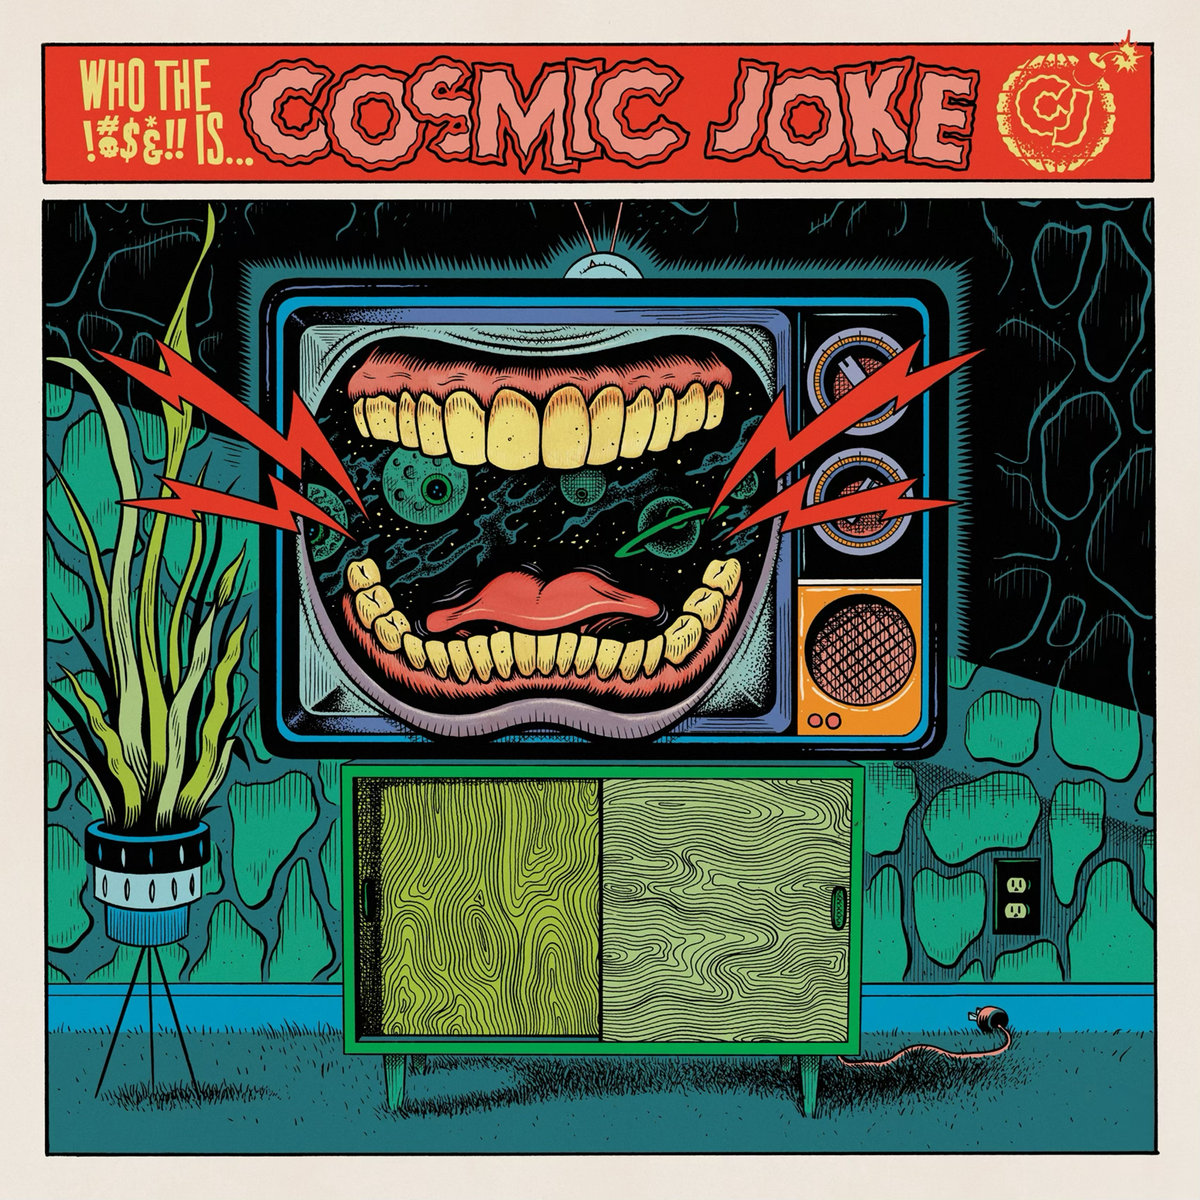 Cosmic Joke album cover